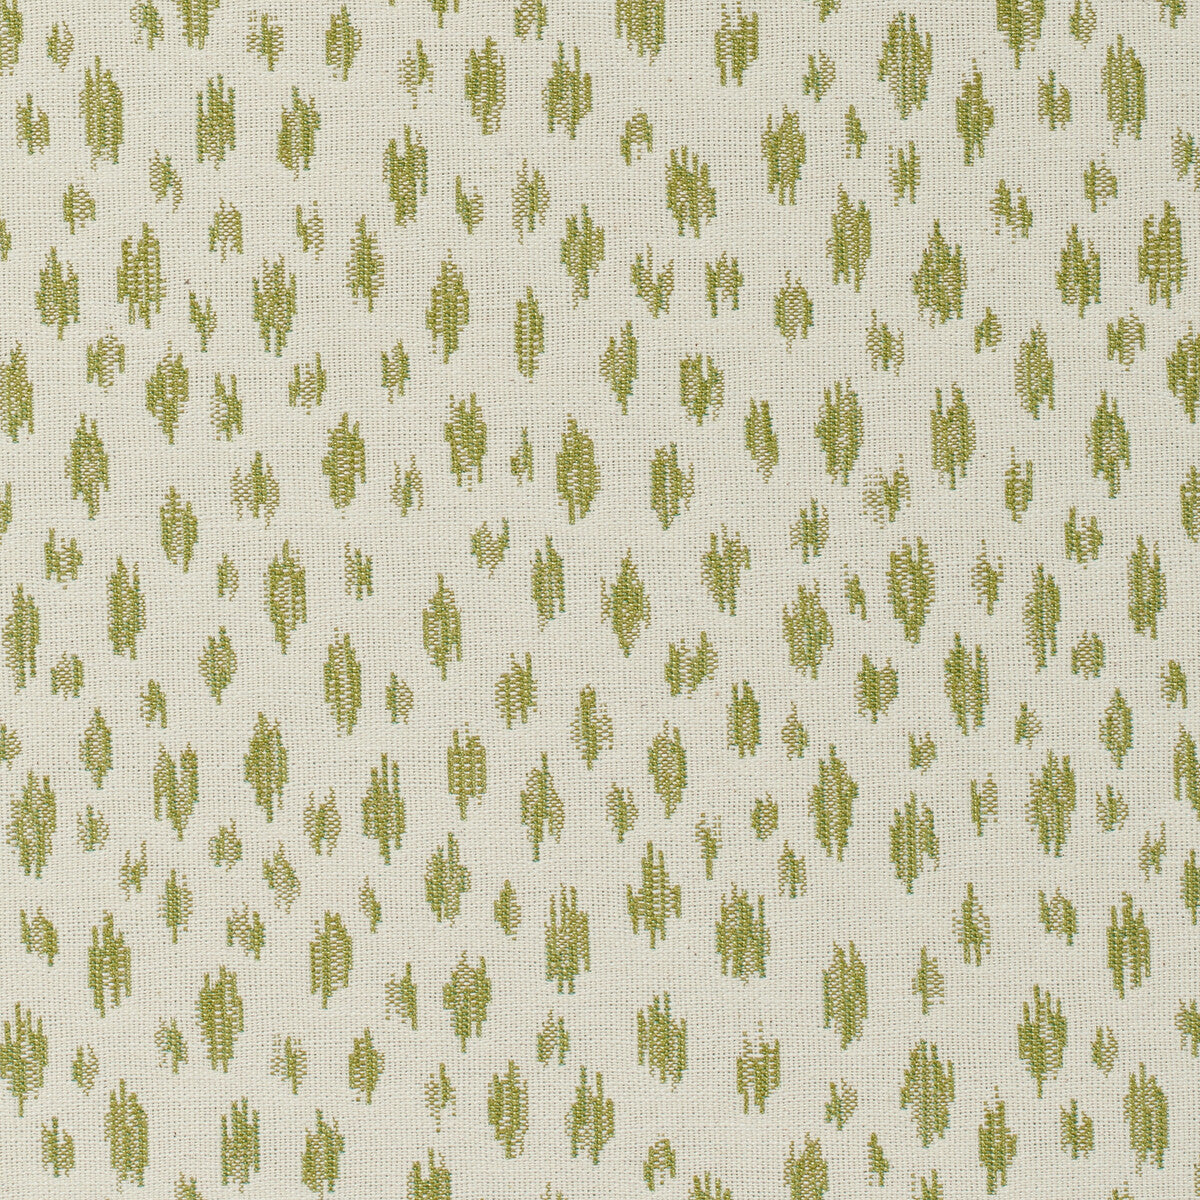 Honfleur Woven fabric in leaf color - pattern 8020112.3.0 - by Brunschwig &amp; Fils